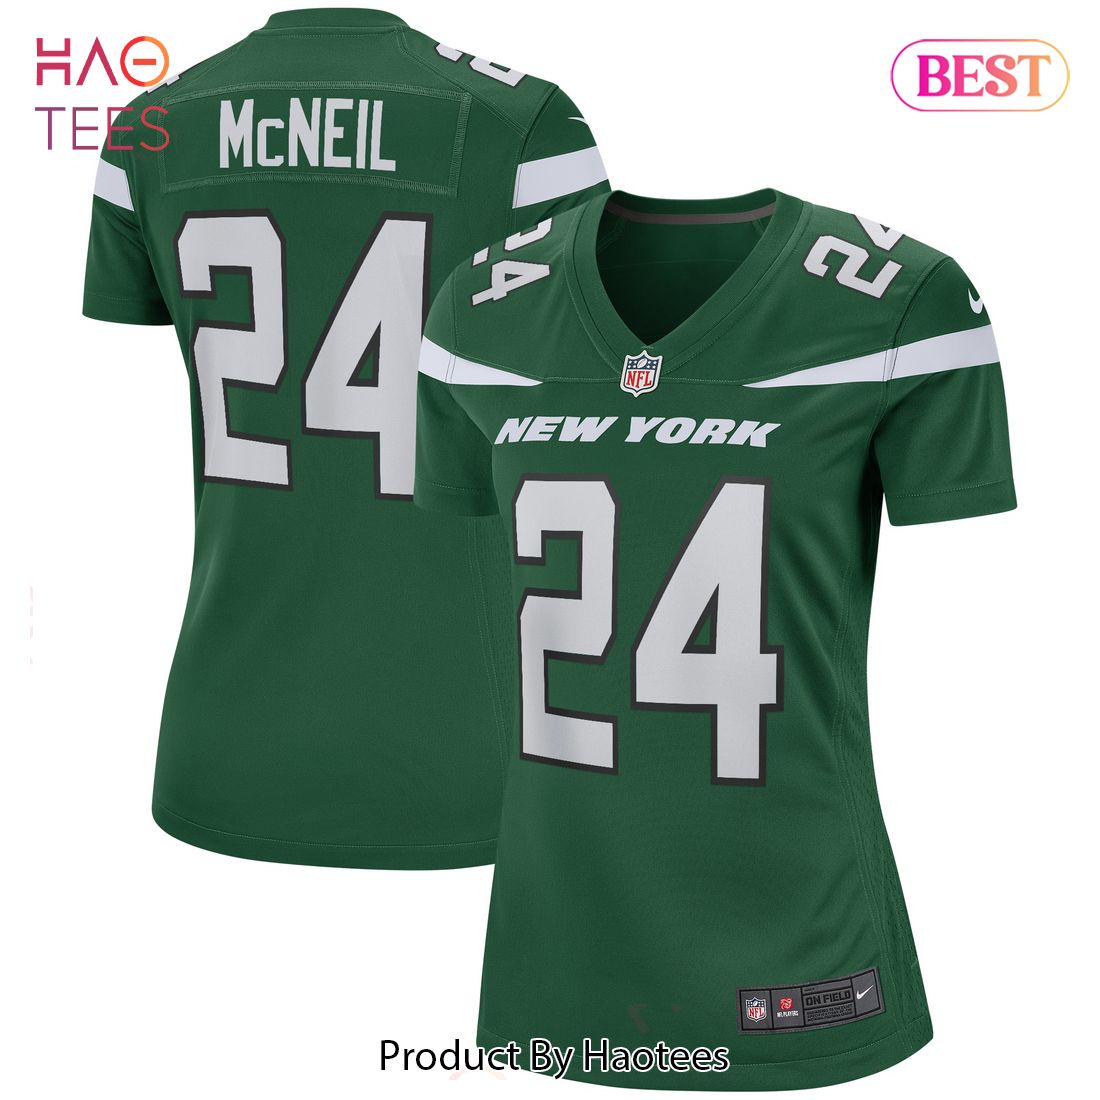 Freeman McNeil New York Jets Nike Women's Game Retired Player Jersey Gotham Green